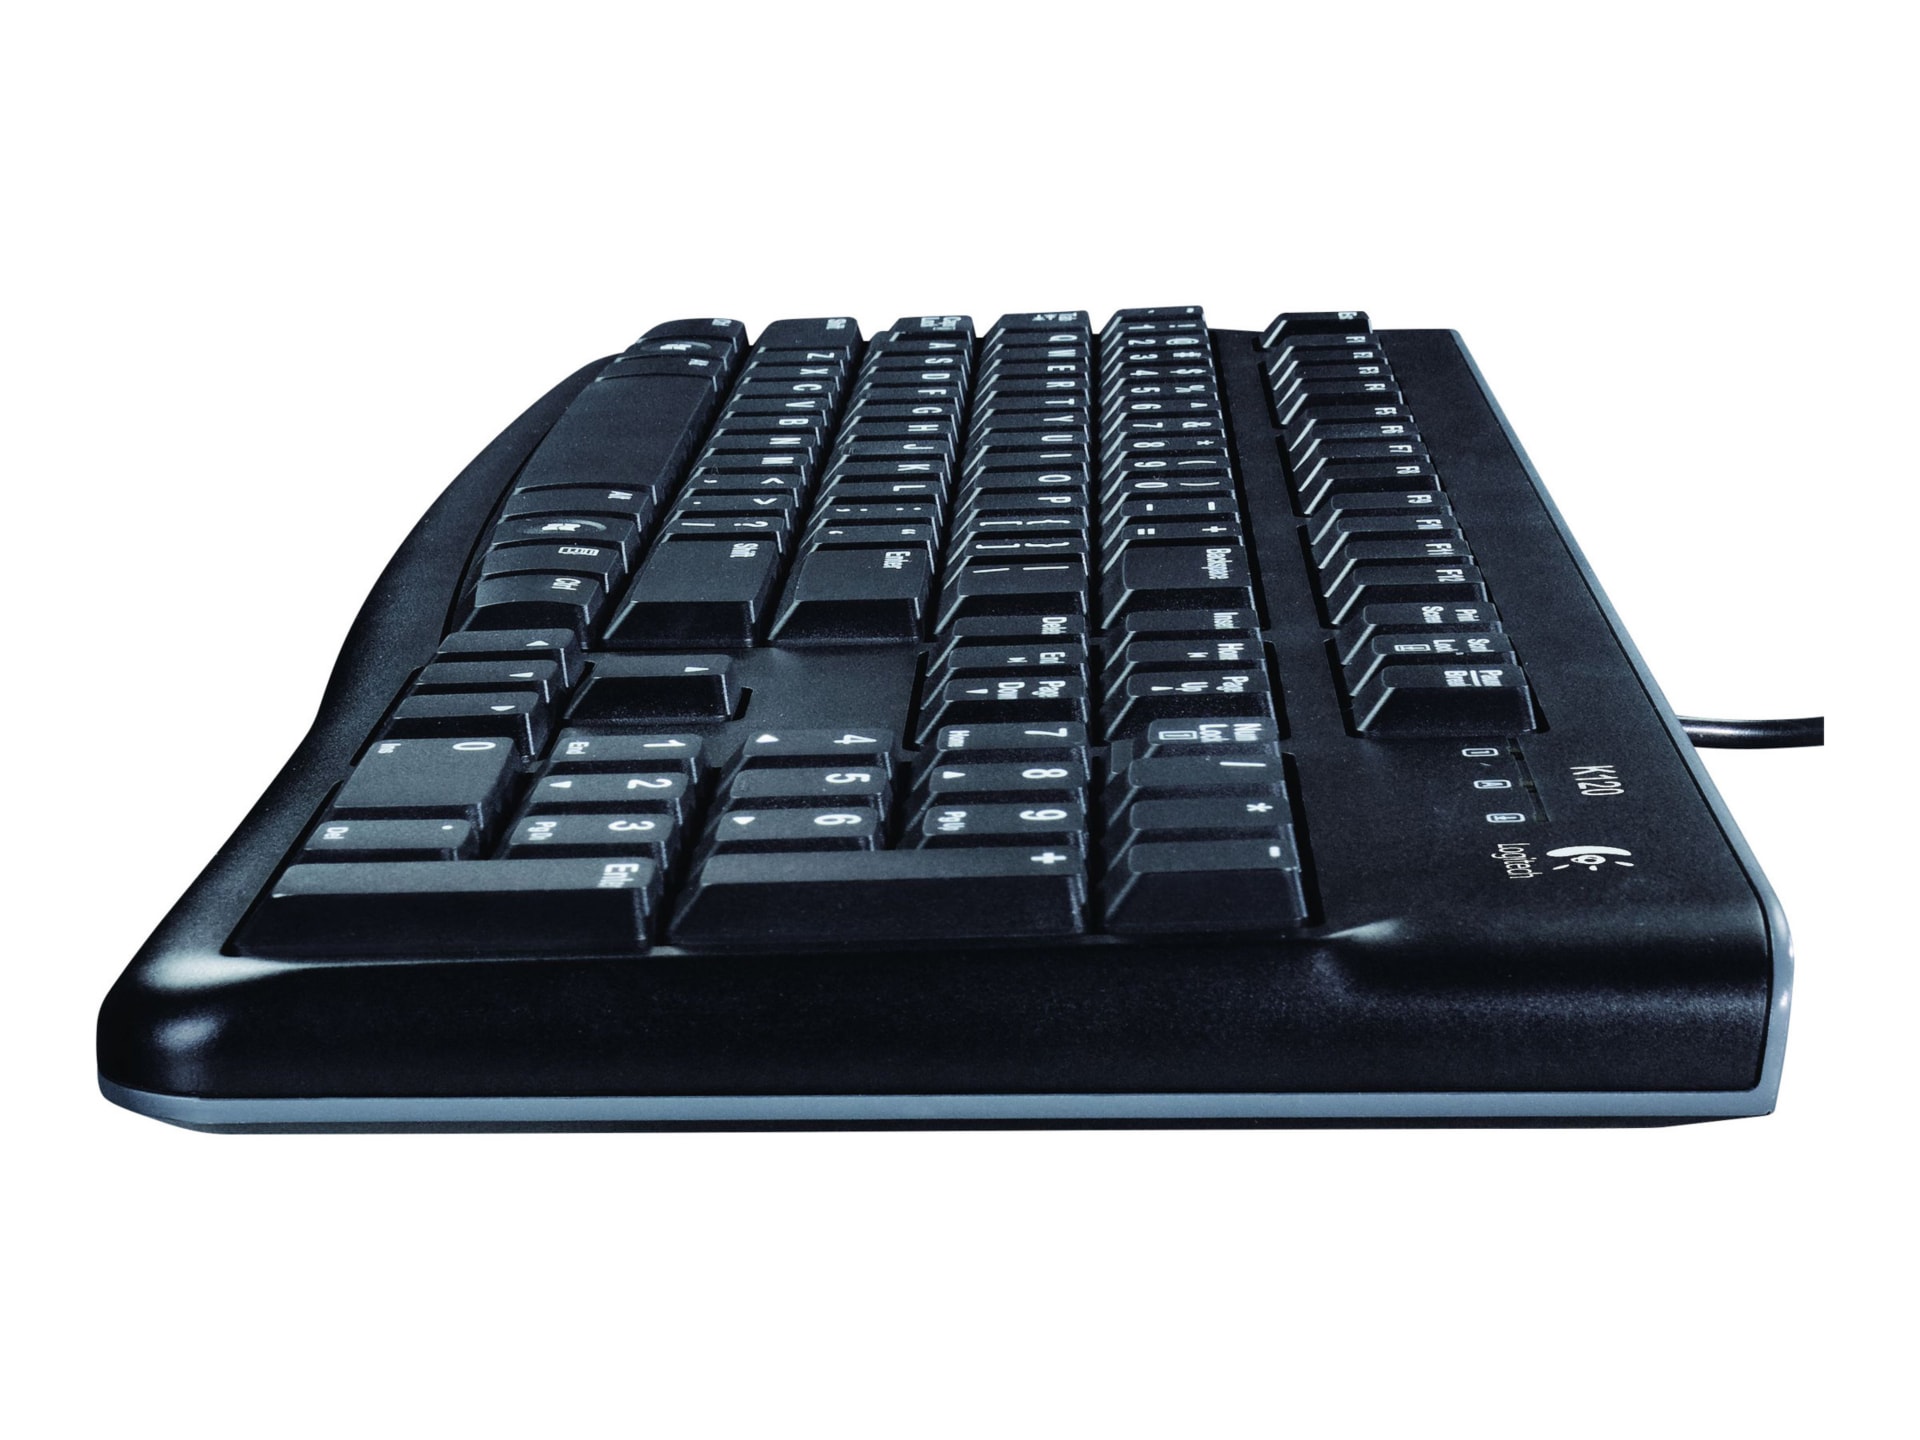 Logitech K120 - keyboard - English - black Input Device